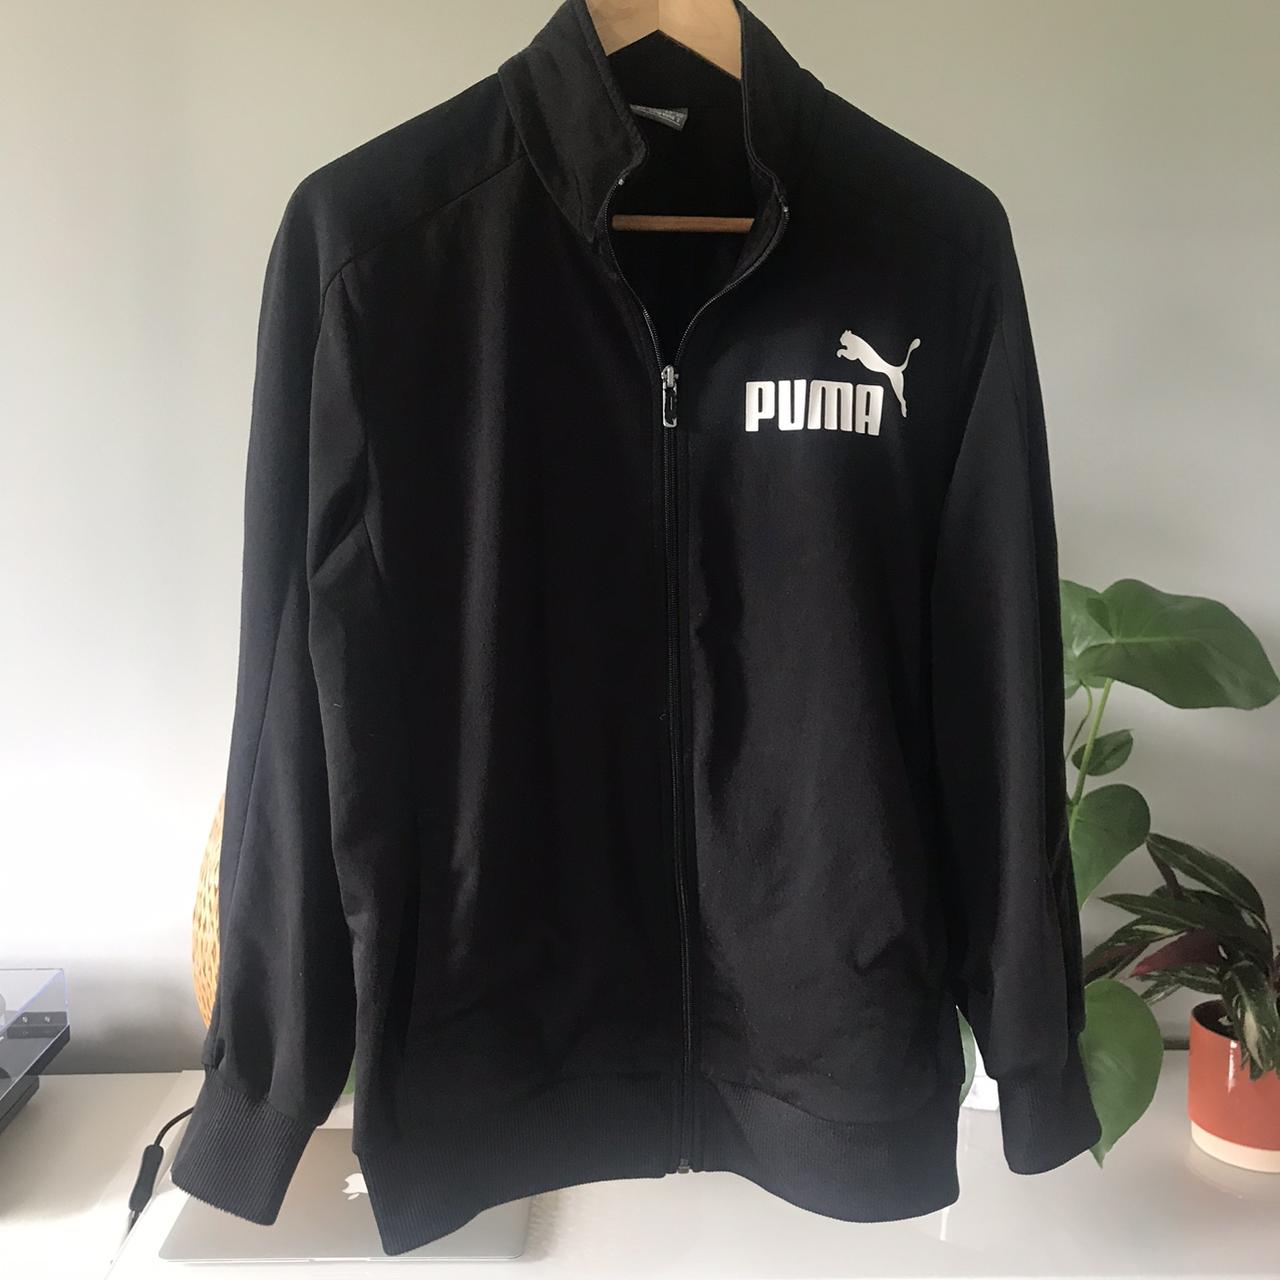 Puma Men's Black and White Jacket | Depop